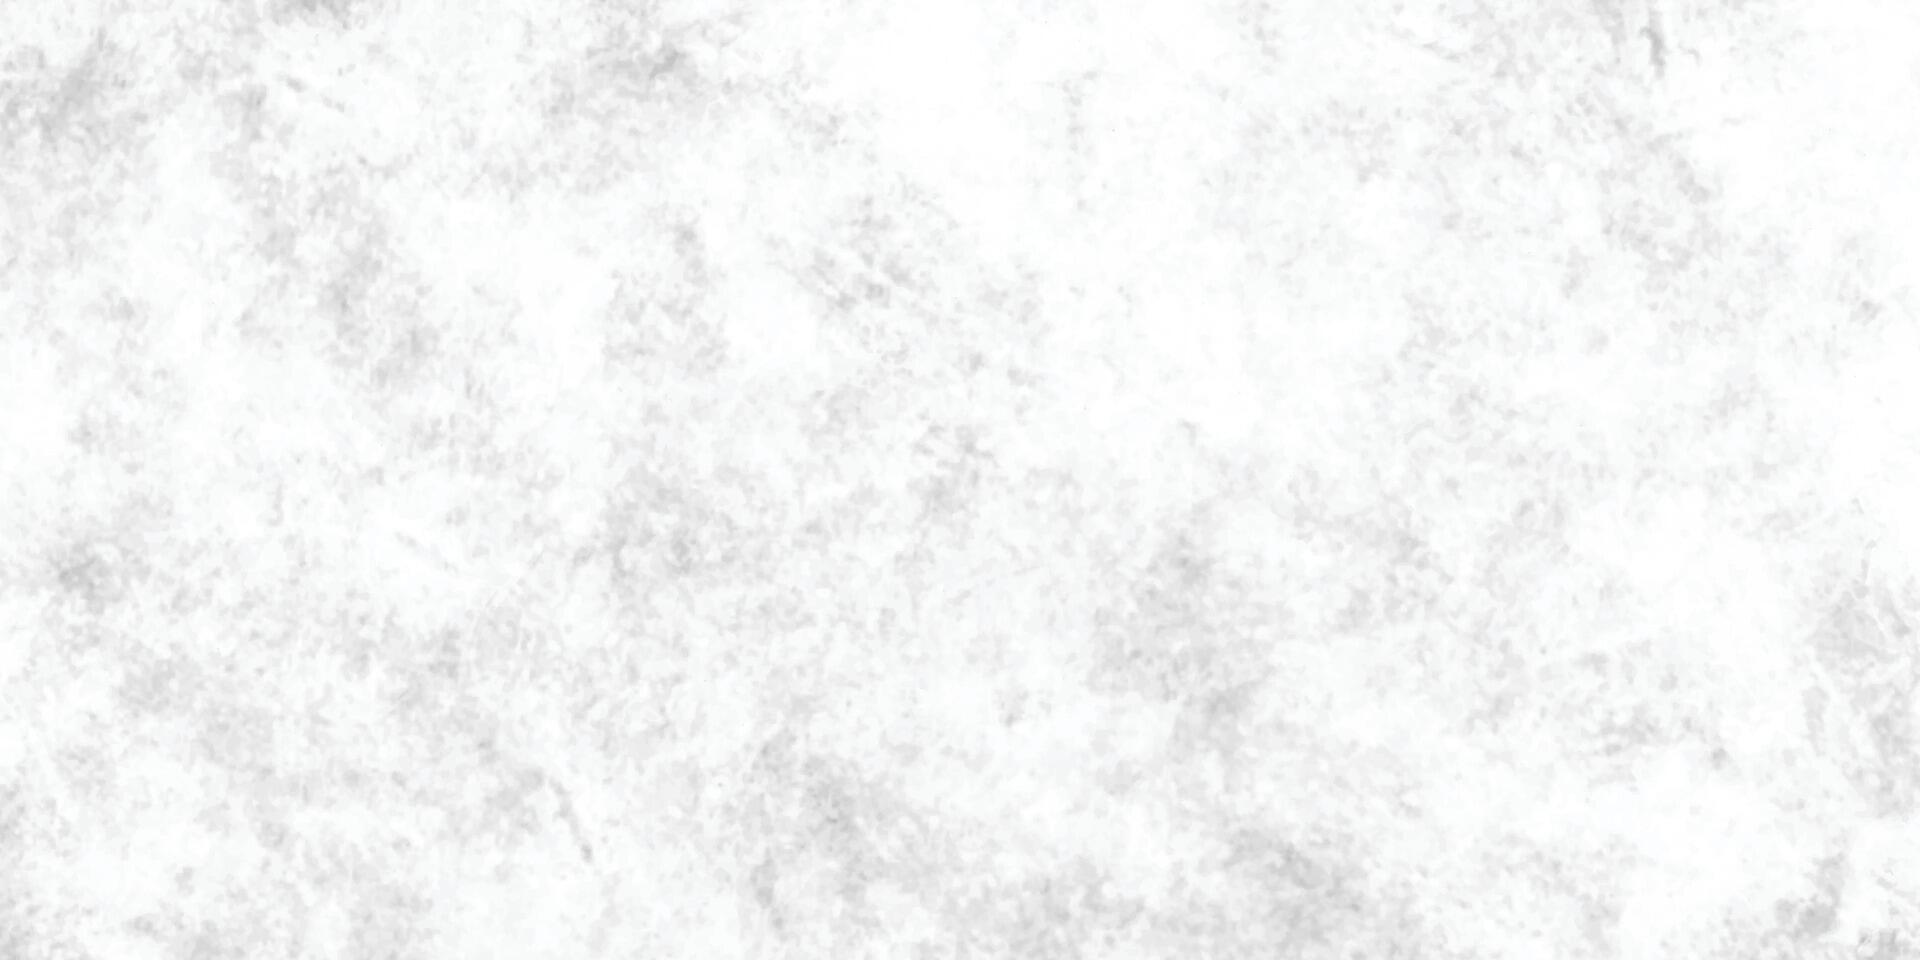 wit achtergrond textuur. abstract wit grunge textuur. wit marmeren textuur. cement ruw wit gips muur structuur achtergrond. grijs beton oppervlak. vector